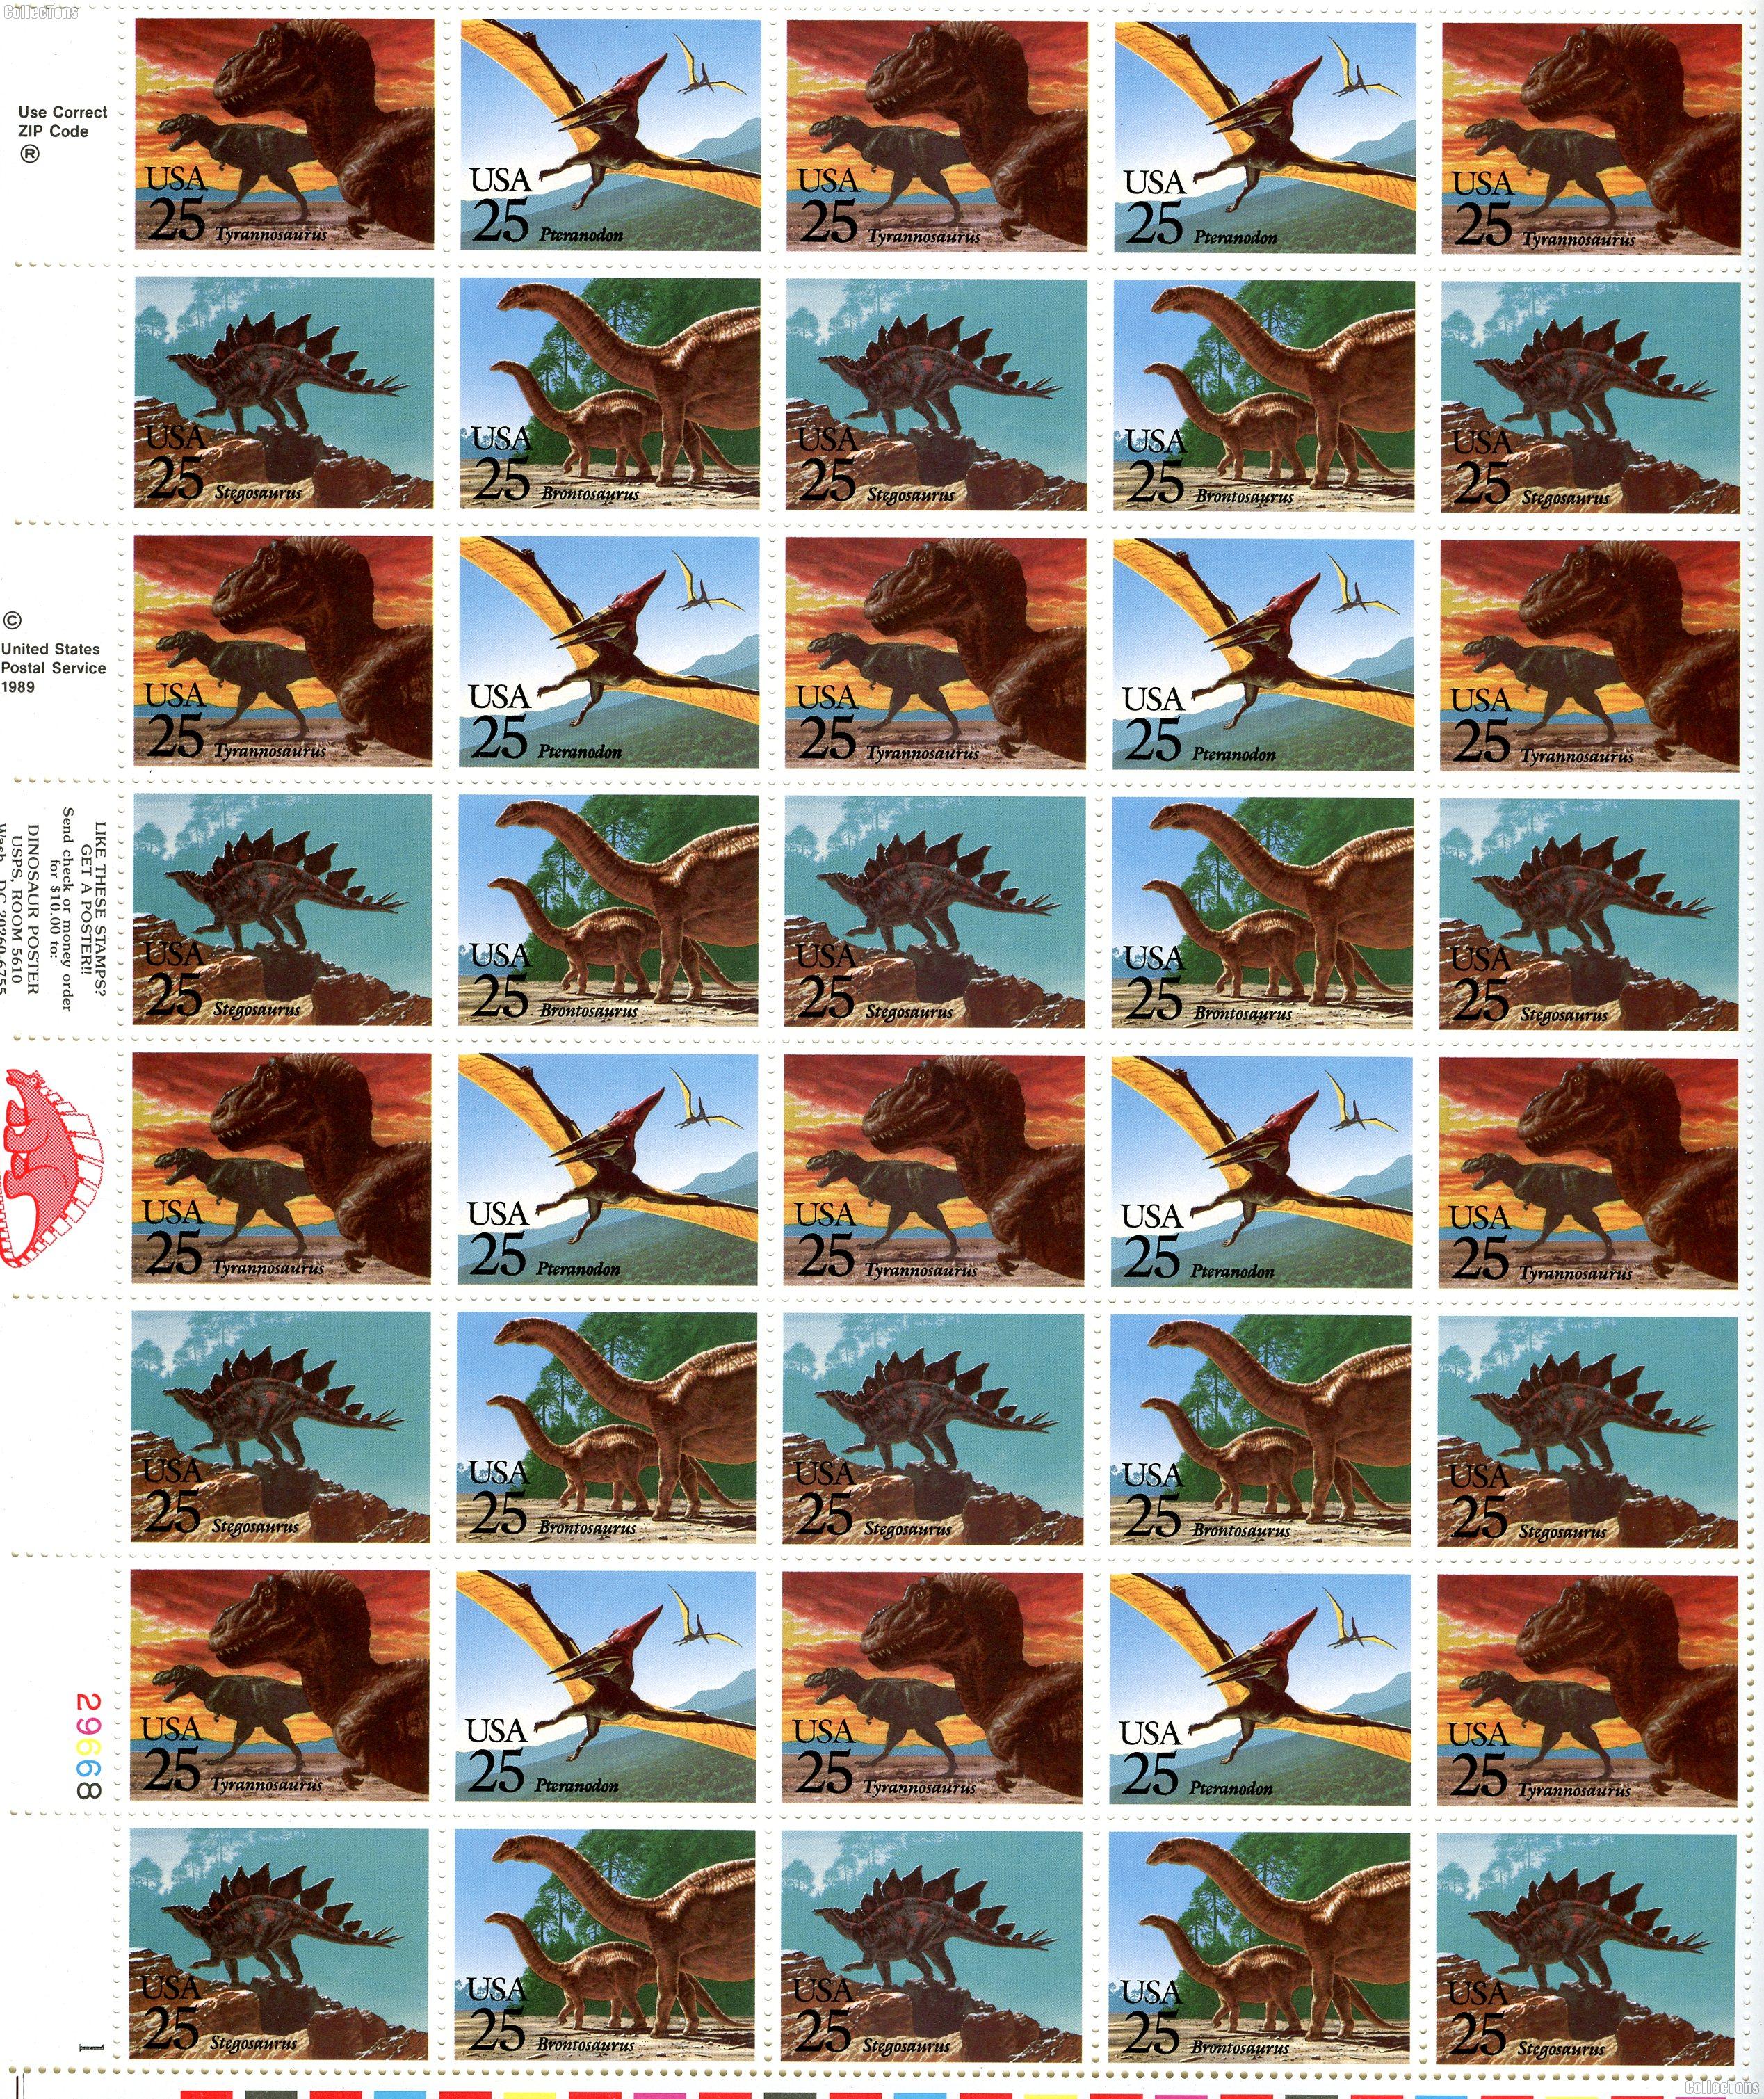 1989 Prehistoric Animals US Postage Stamp MNH Sheet of 50 Scott #2422-2425